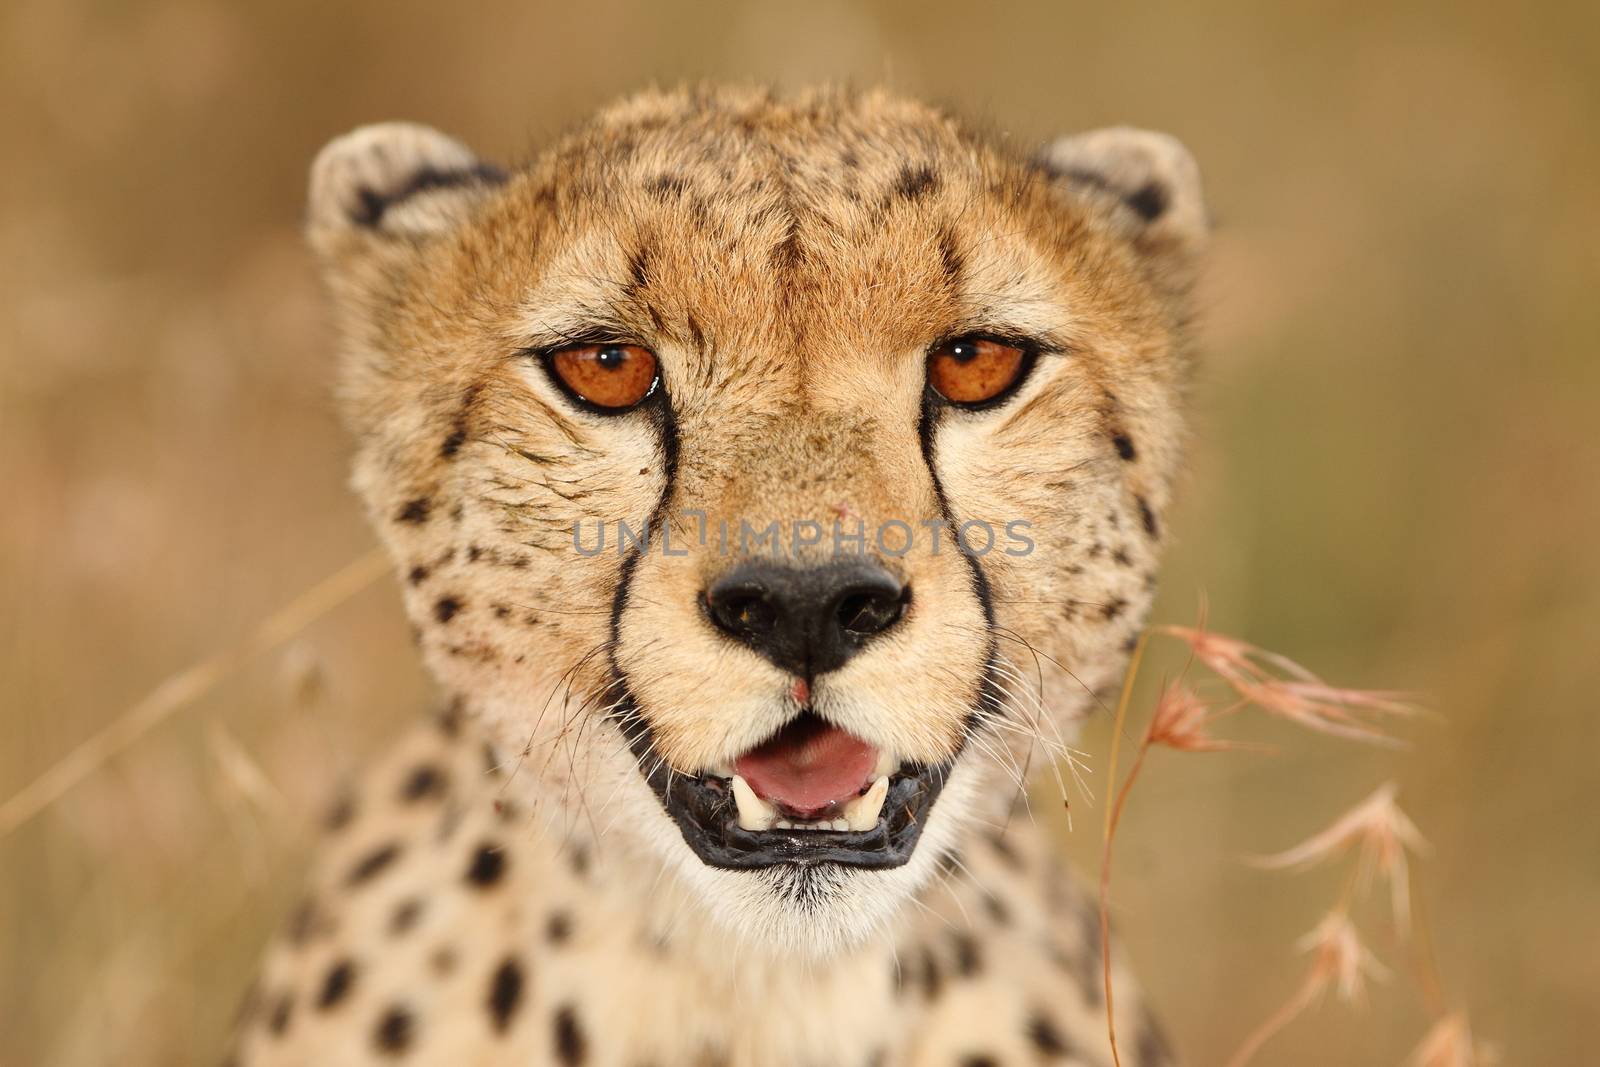 Cheetah in the wilderness of Africa by ozkanzozmen